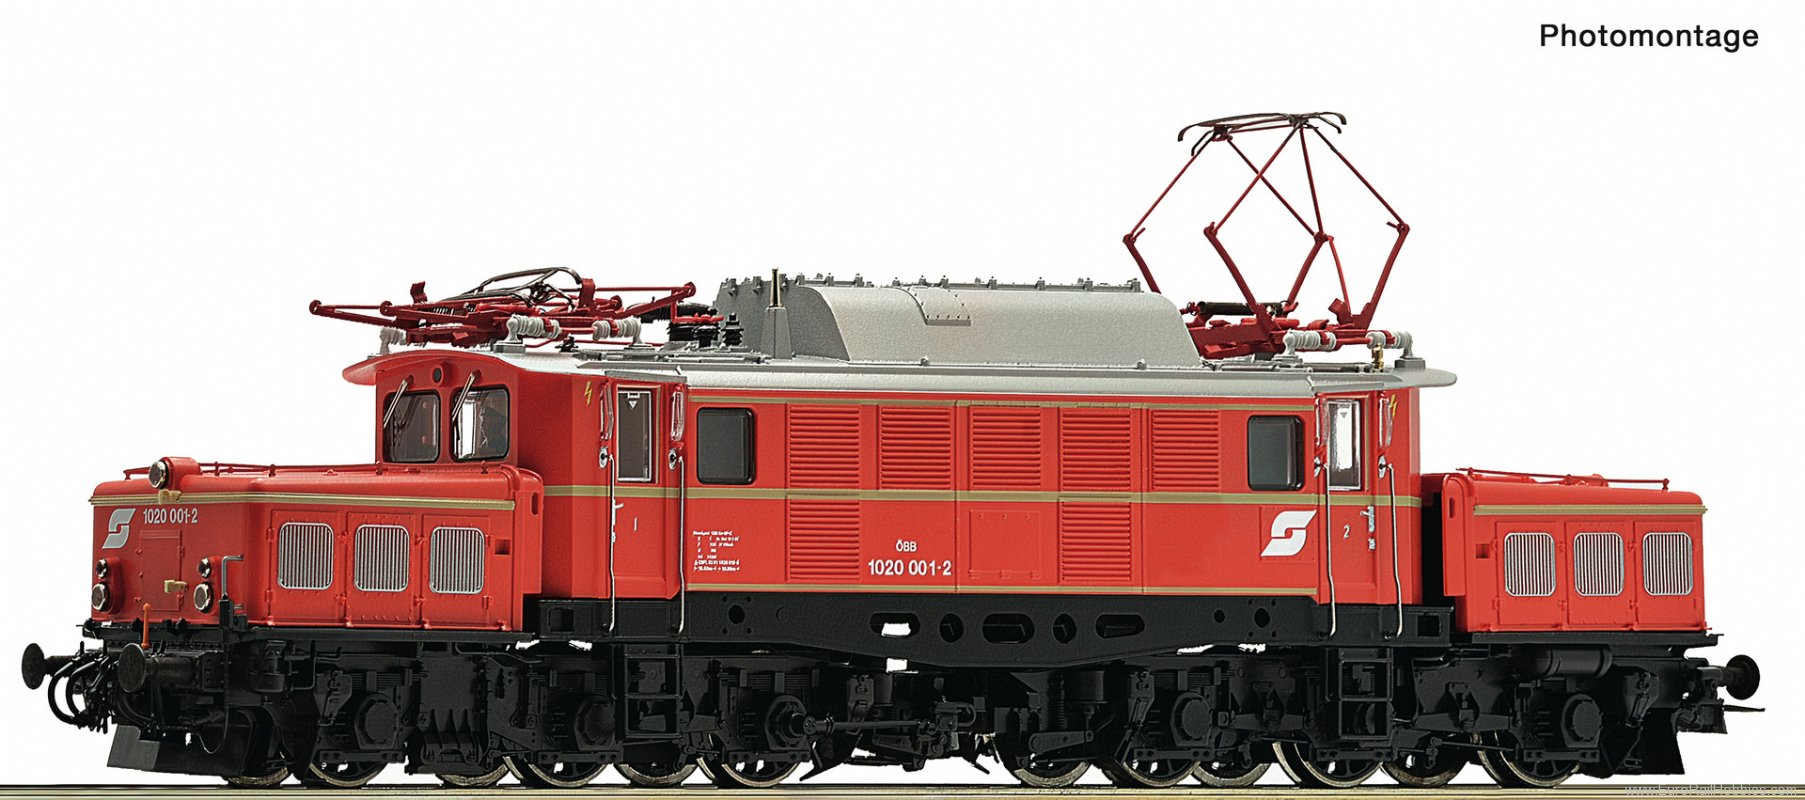 Roco 7520009 Electric locomotive 1020 001-2 ÃBB (AC Dig